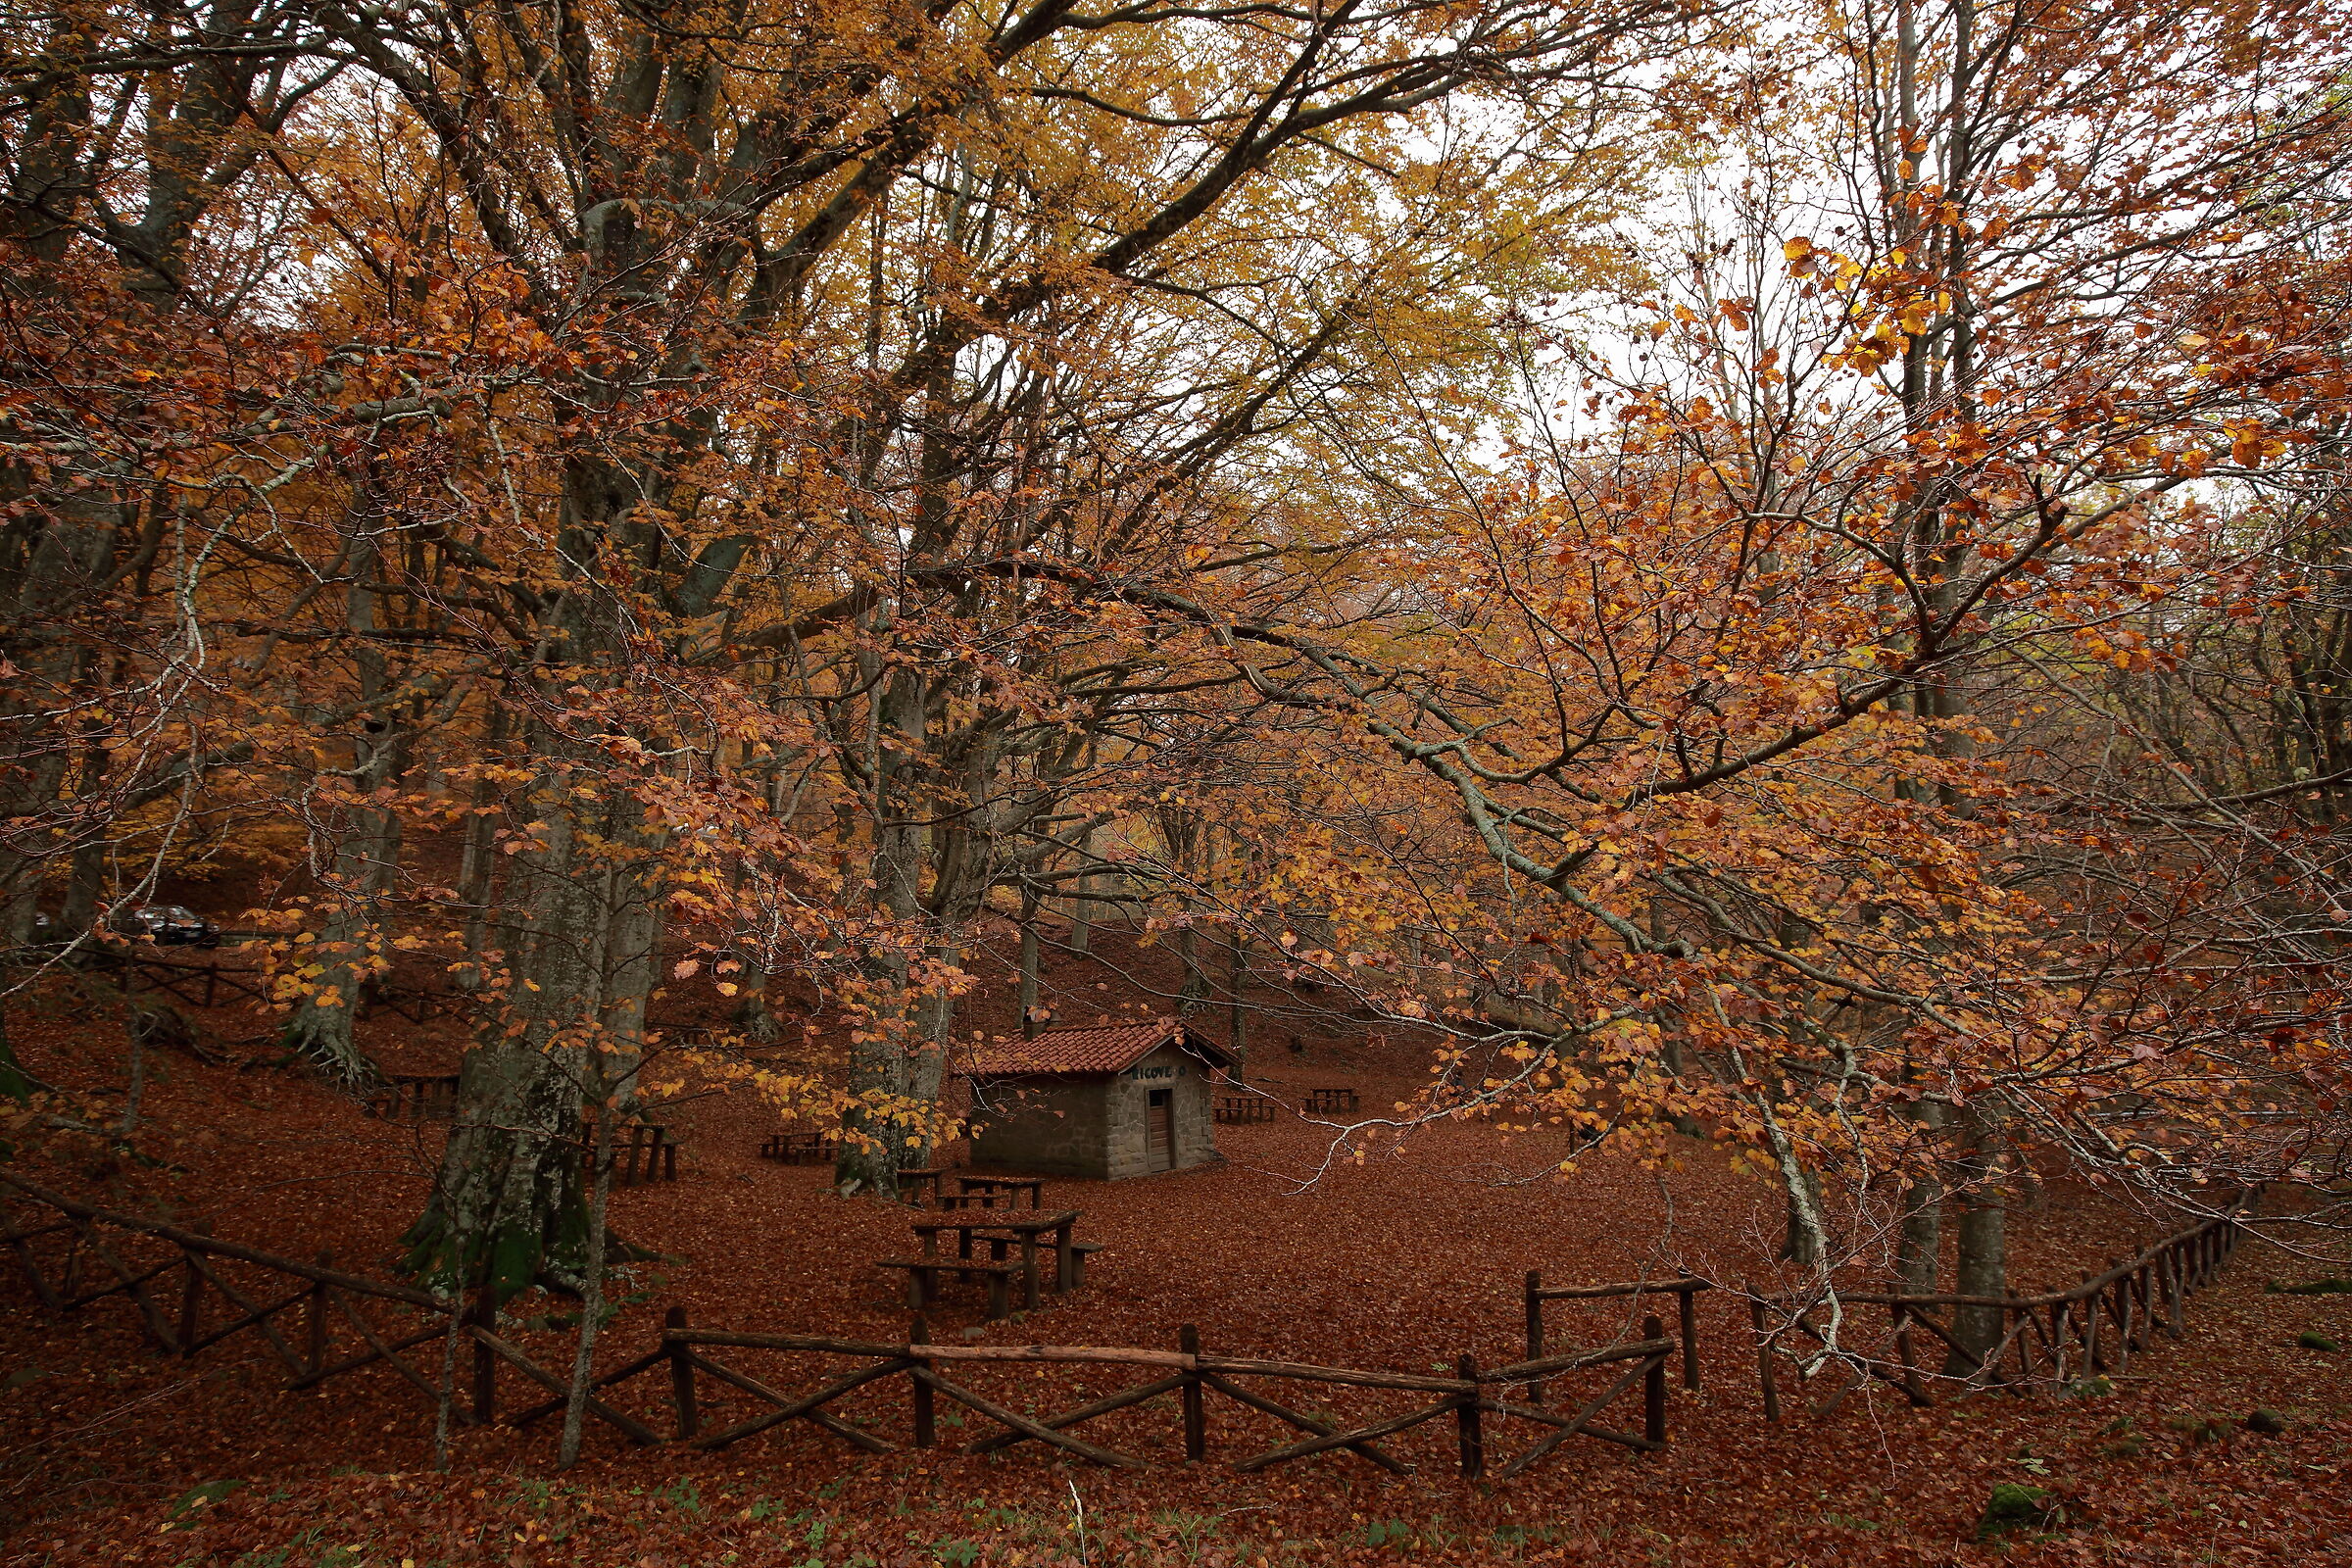 The little refuge inside the autumn...